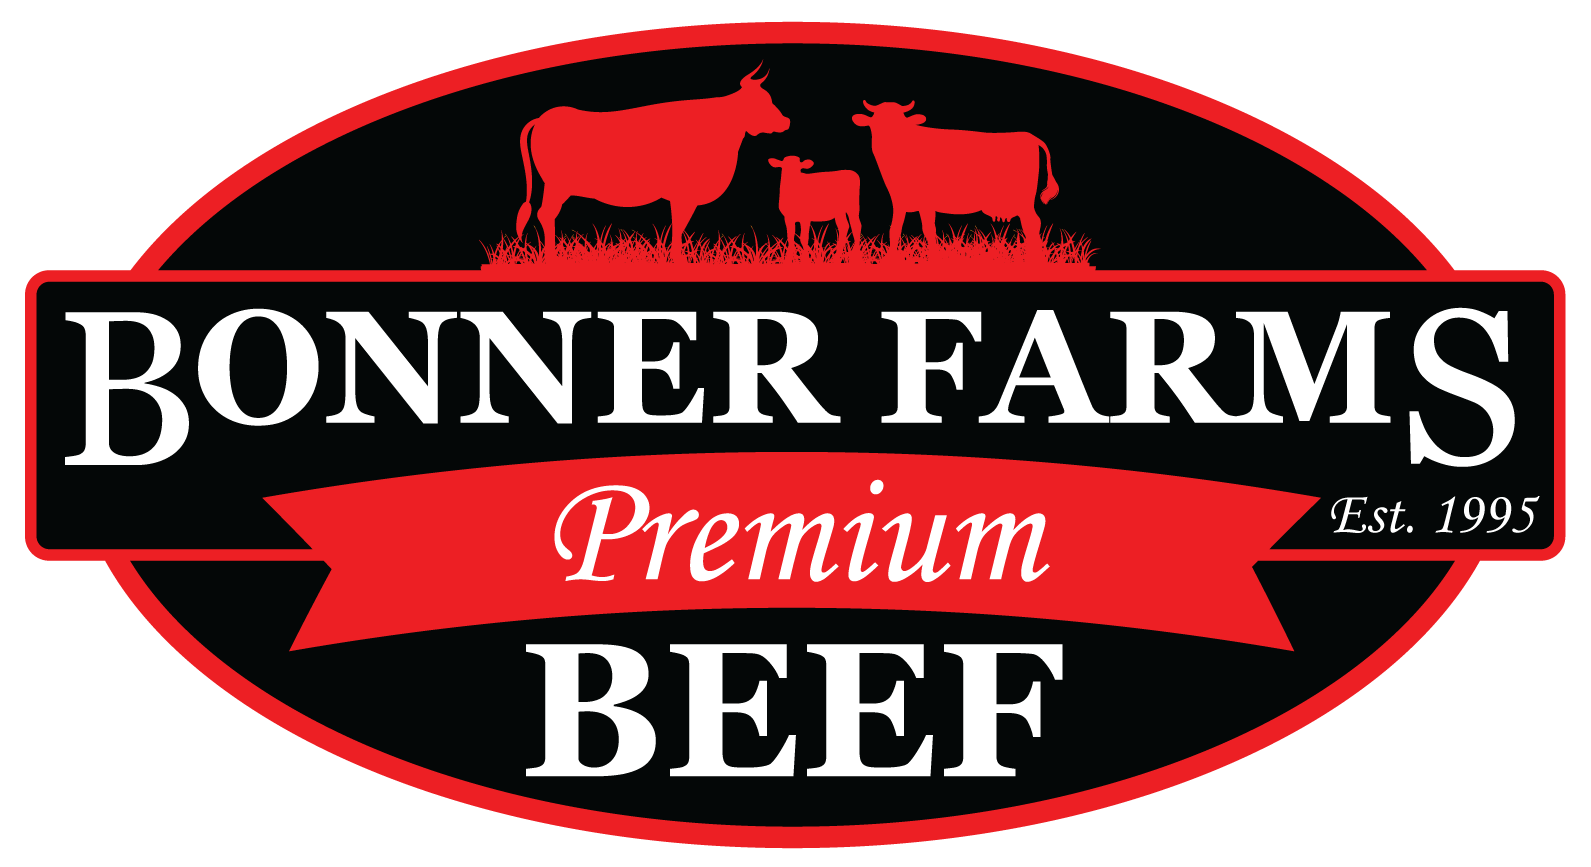 Bonner Farms Premium Natural Beef Brand